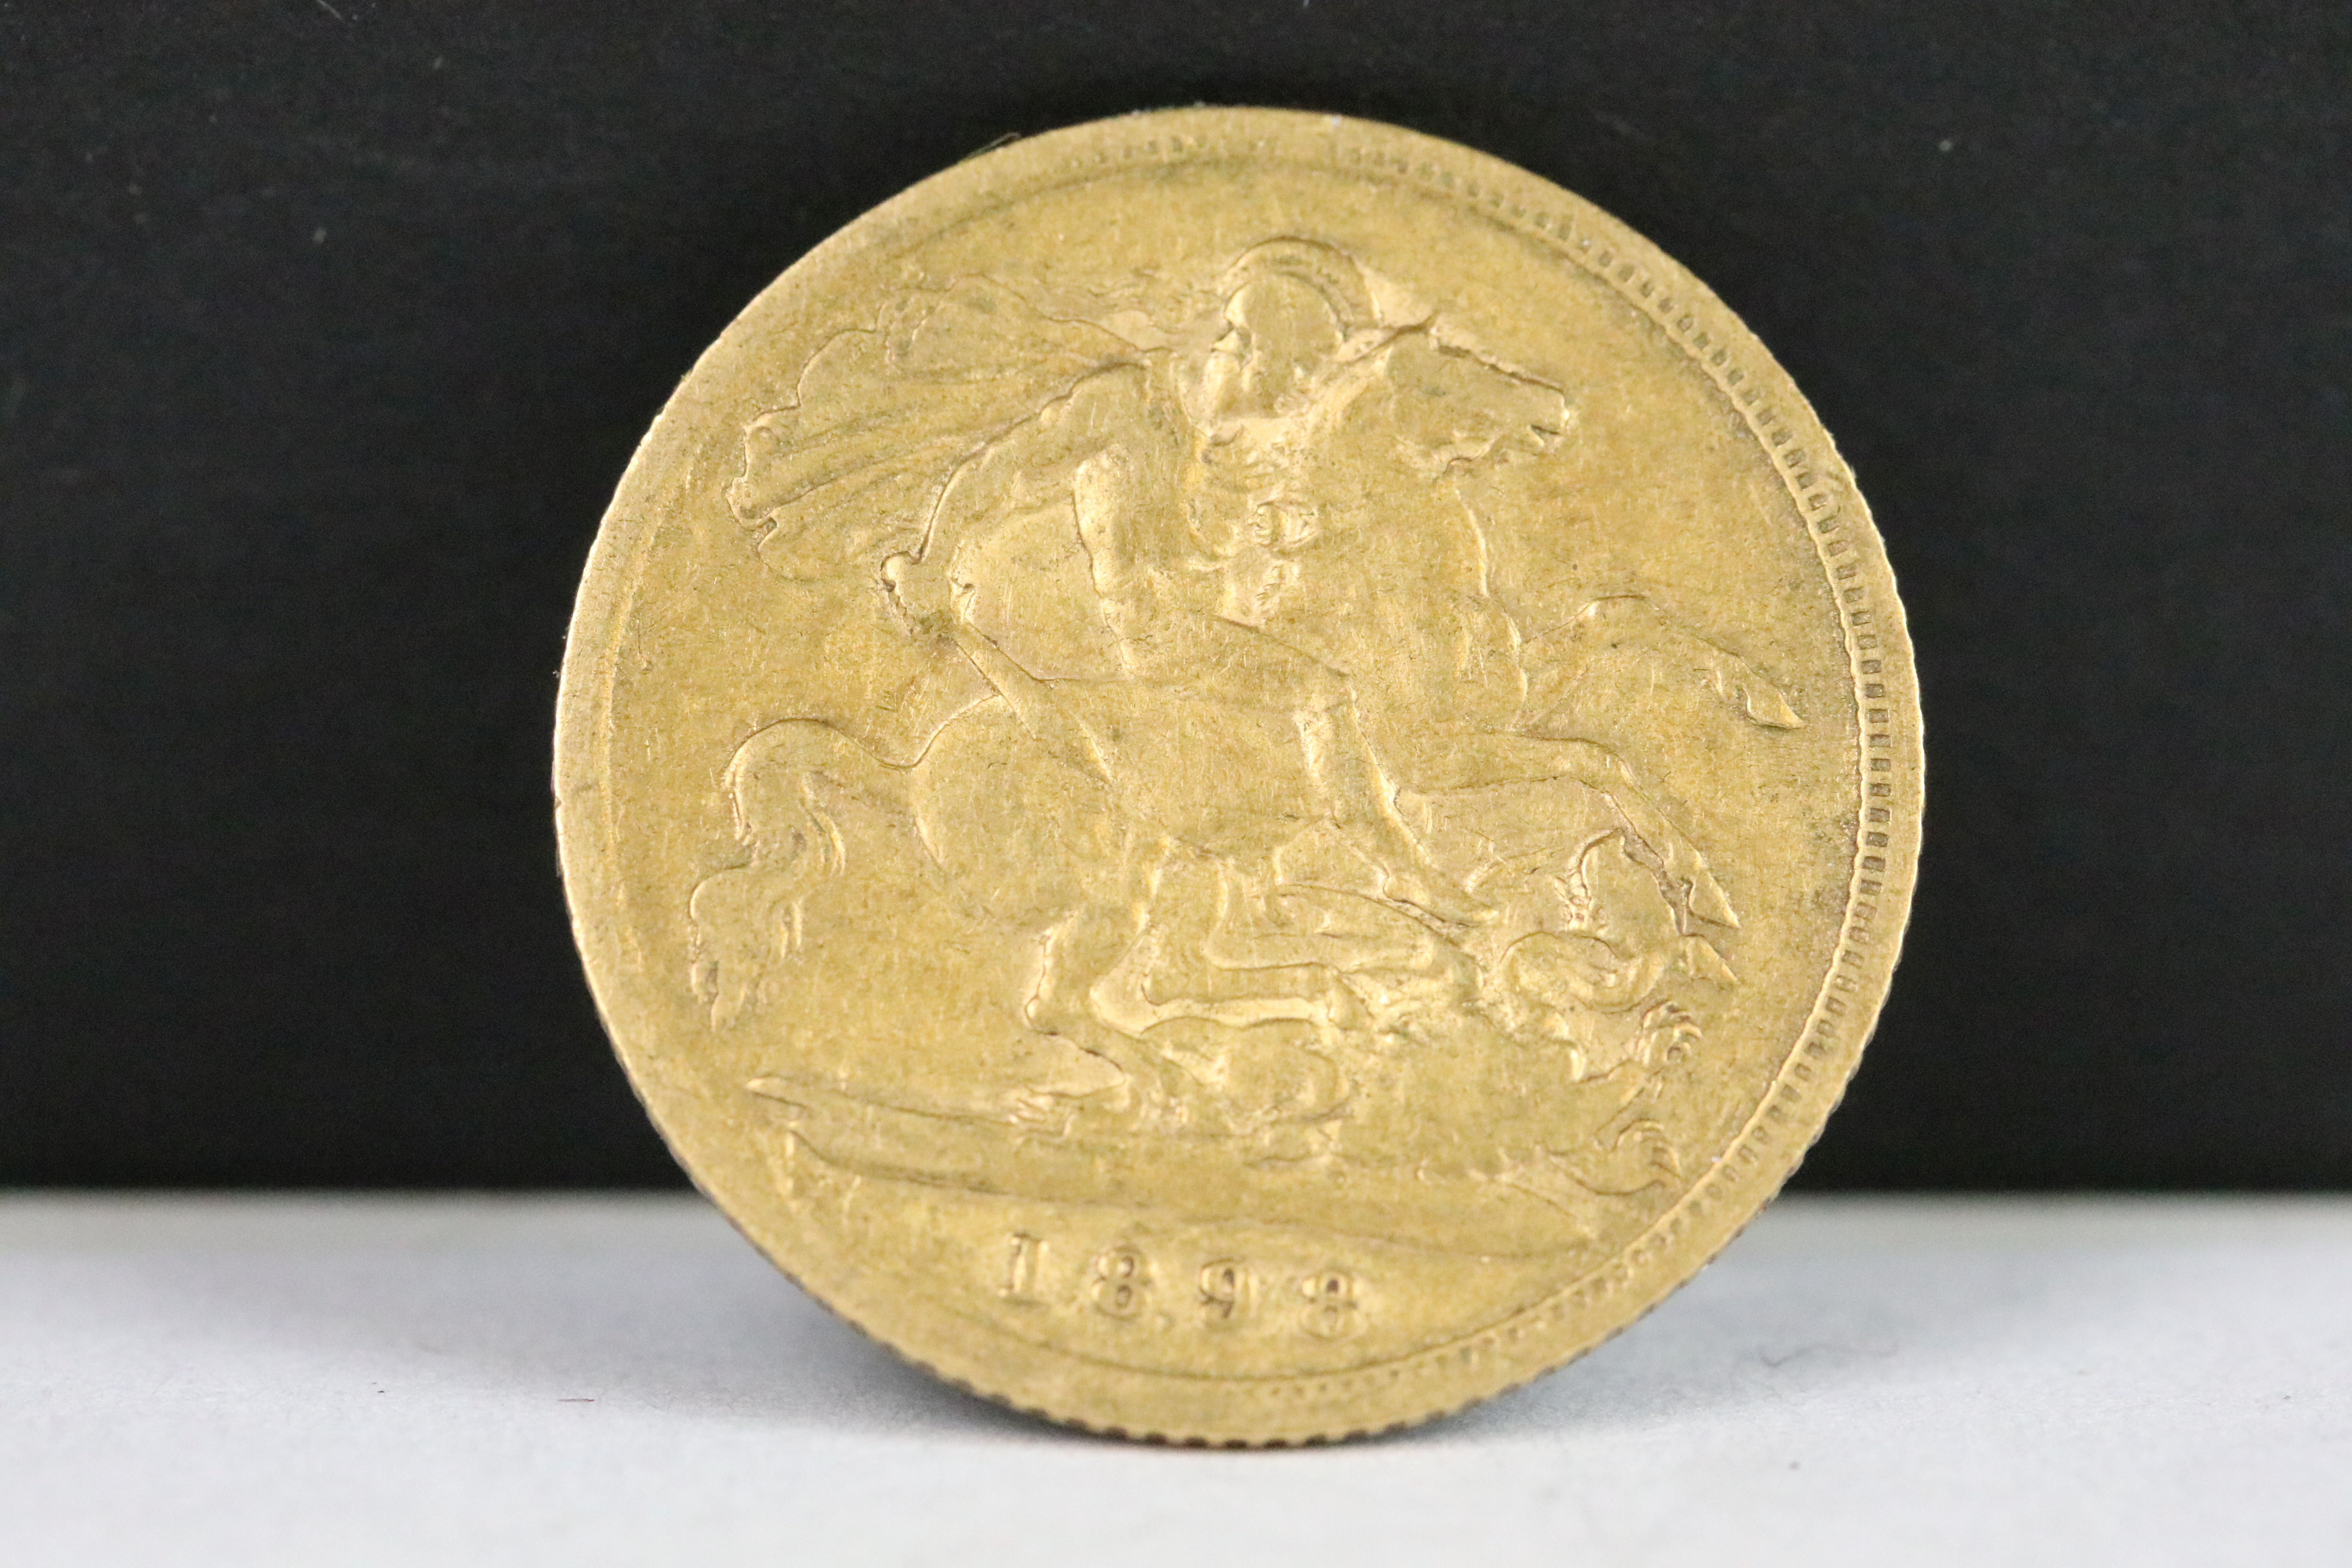 A British Queen Victoria 1893 gold half sovereign coin.